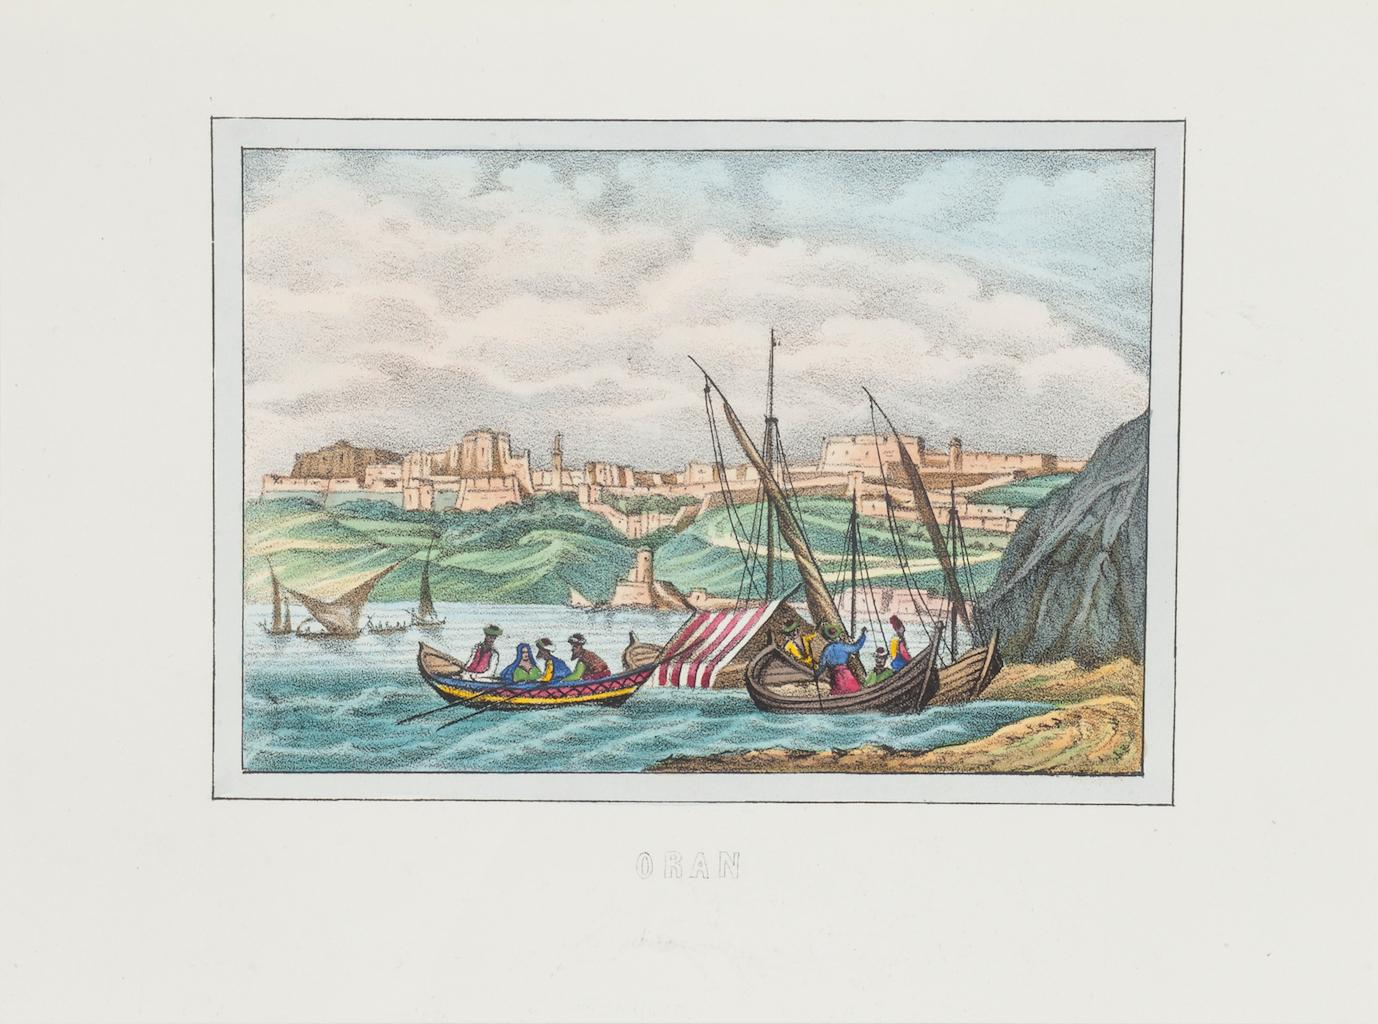 View of Oran - Original Lithograph - 1846